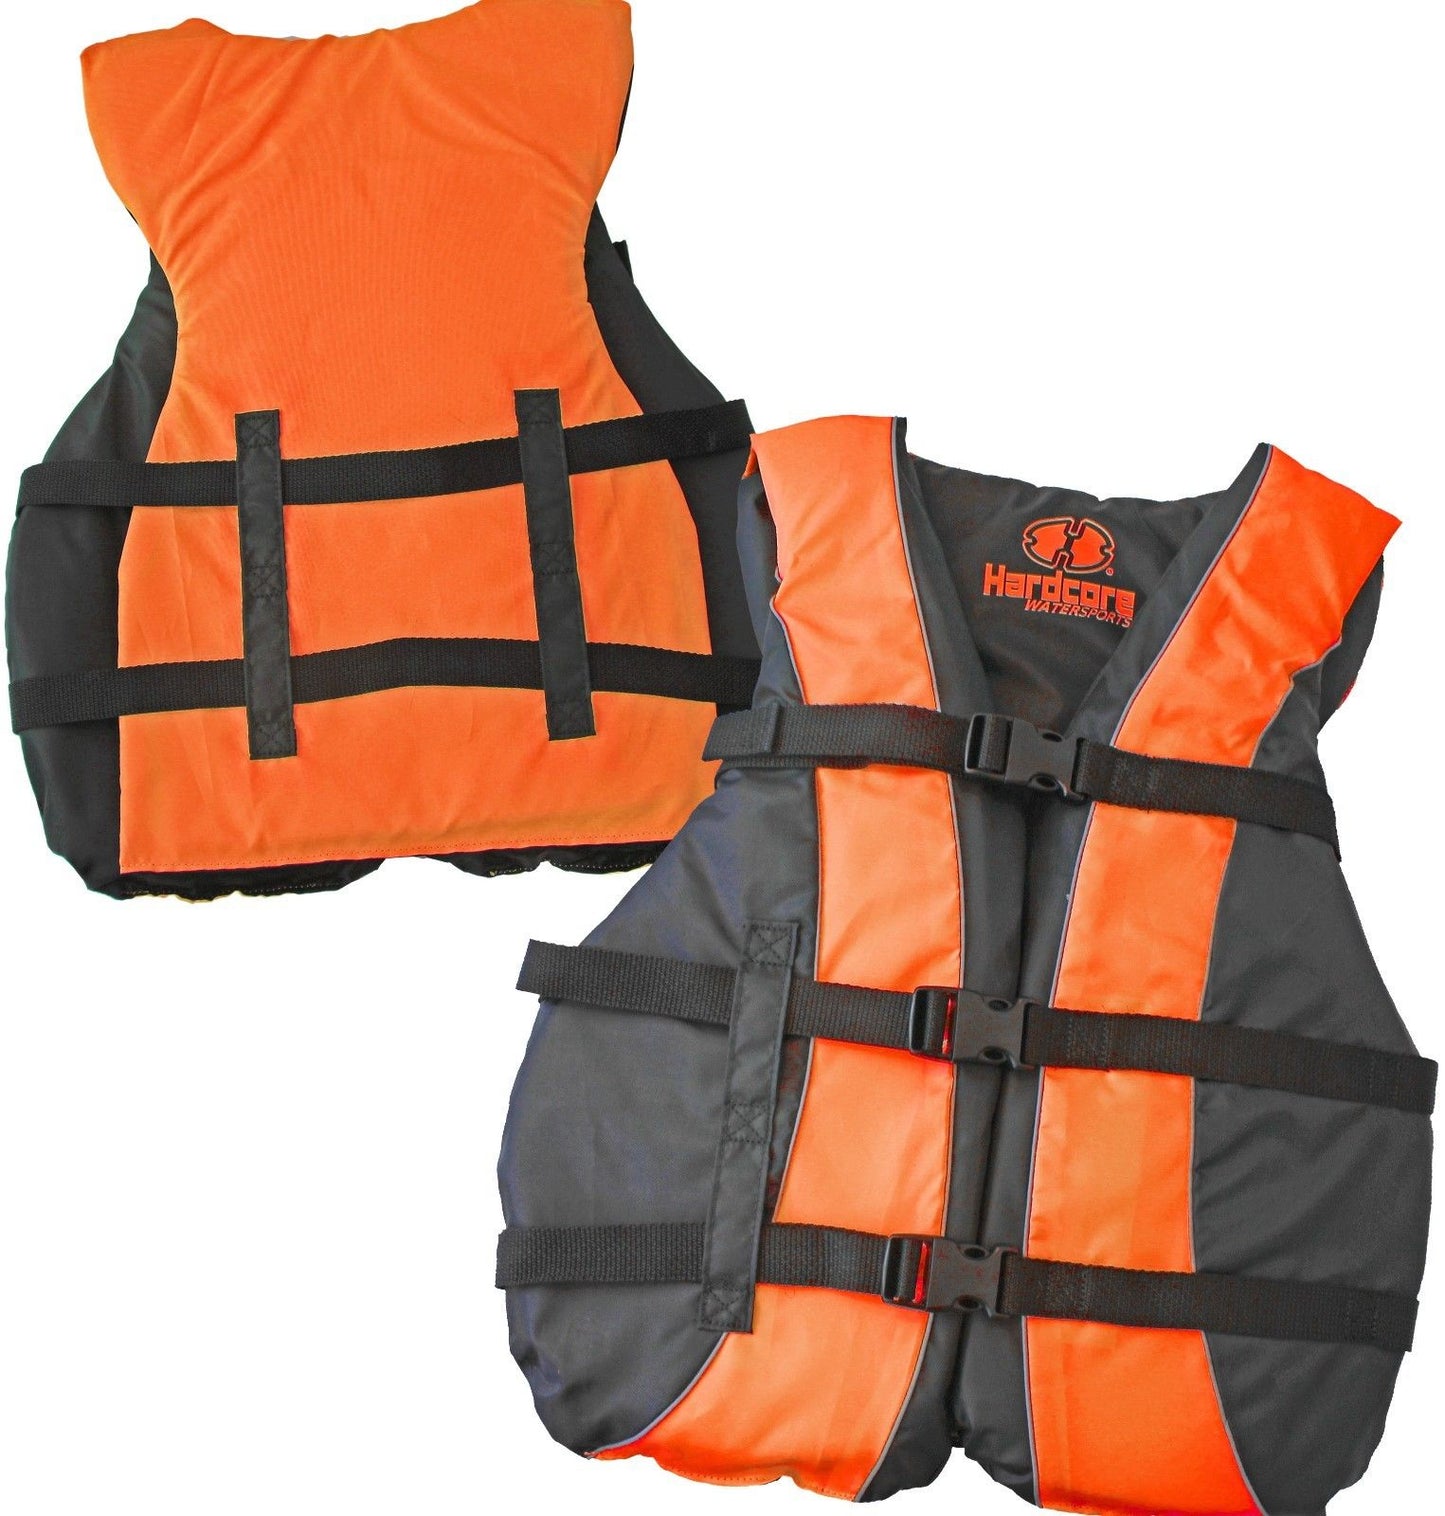 2 Pack Hardcore Adult Life Jacket PFD Type III Coast Guard Ski Vest Neon Orange